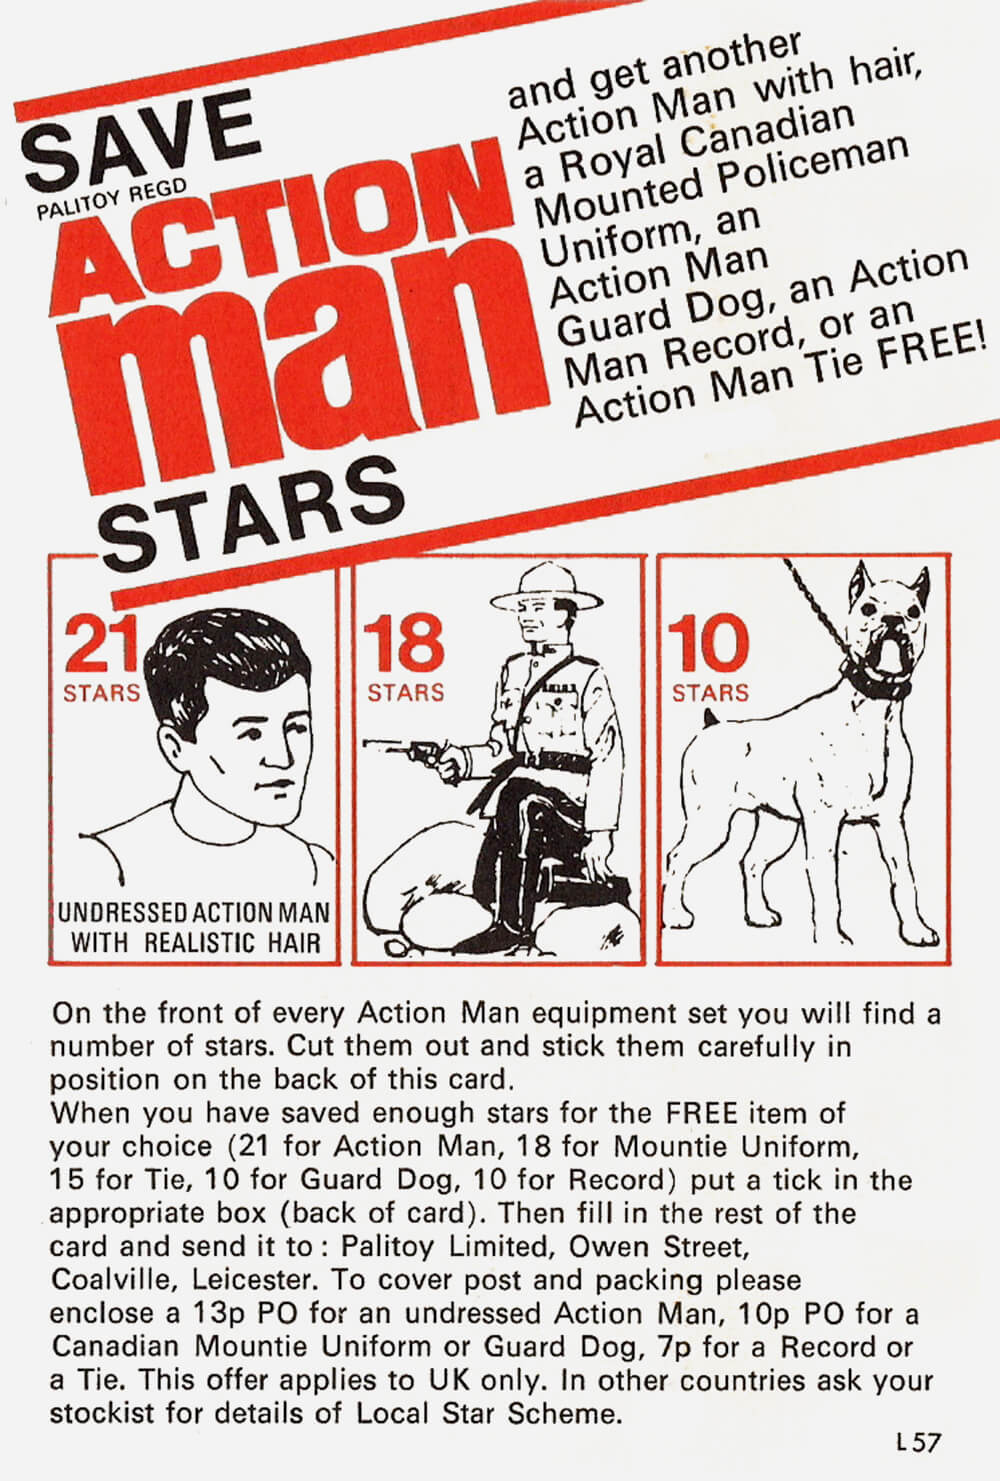 Action Man Star Card L51